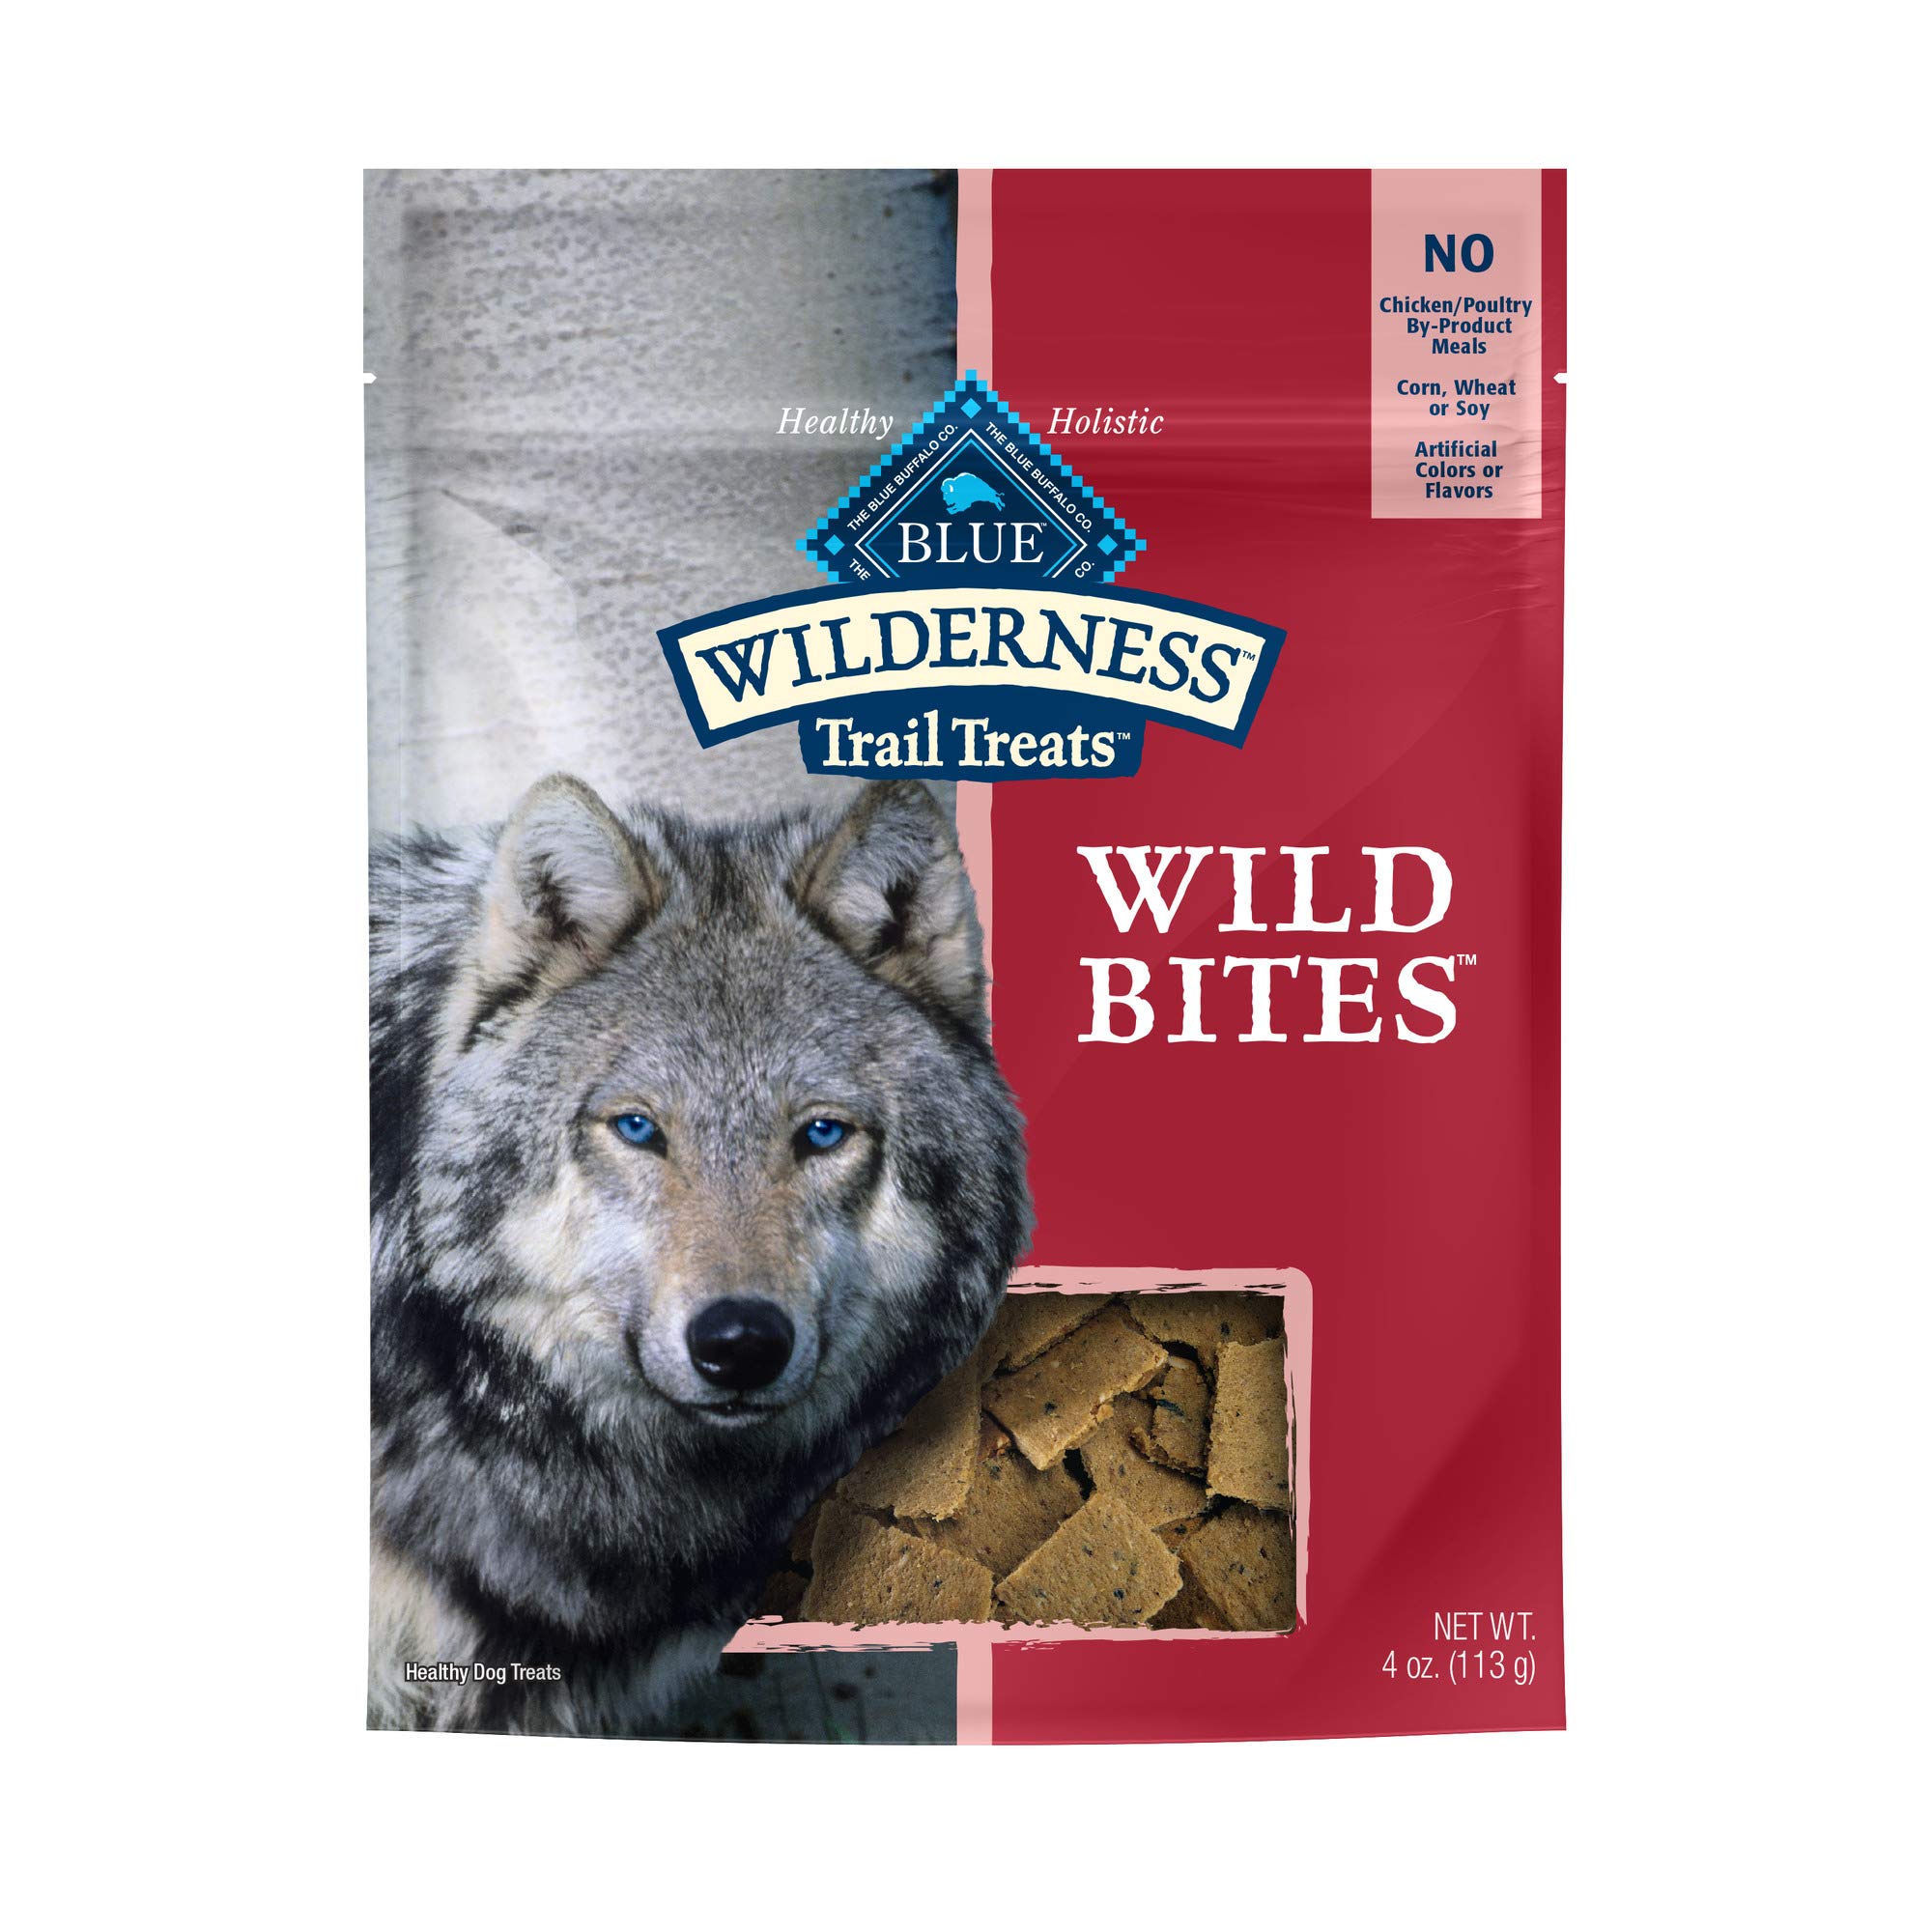 4-Oz Blue Buffalo Wilderness Trail Treats Wild Bites Grain Free Soft-Moist Dog Treats, Salmon $1.74 or less & More